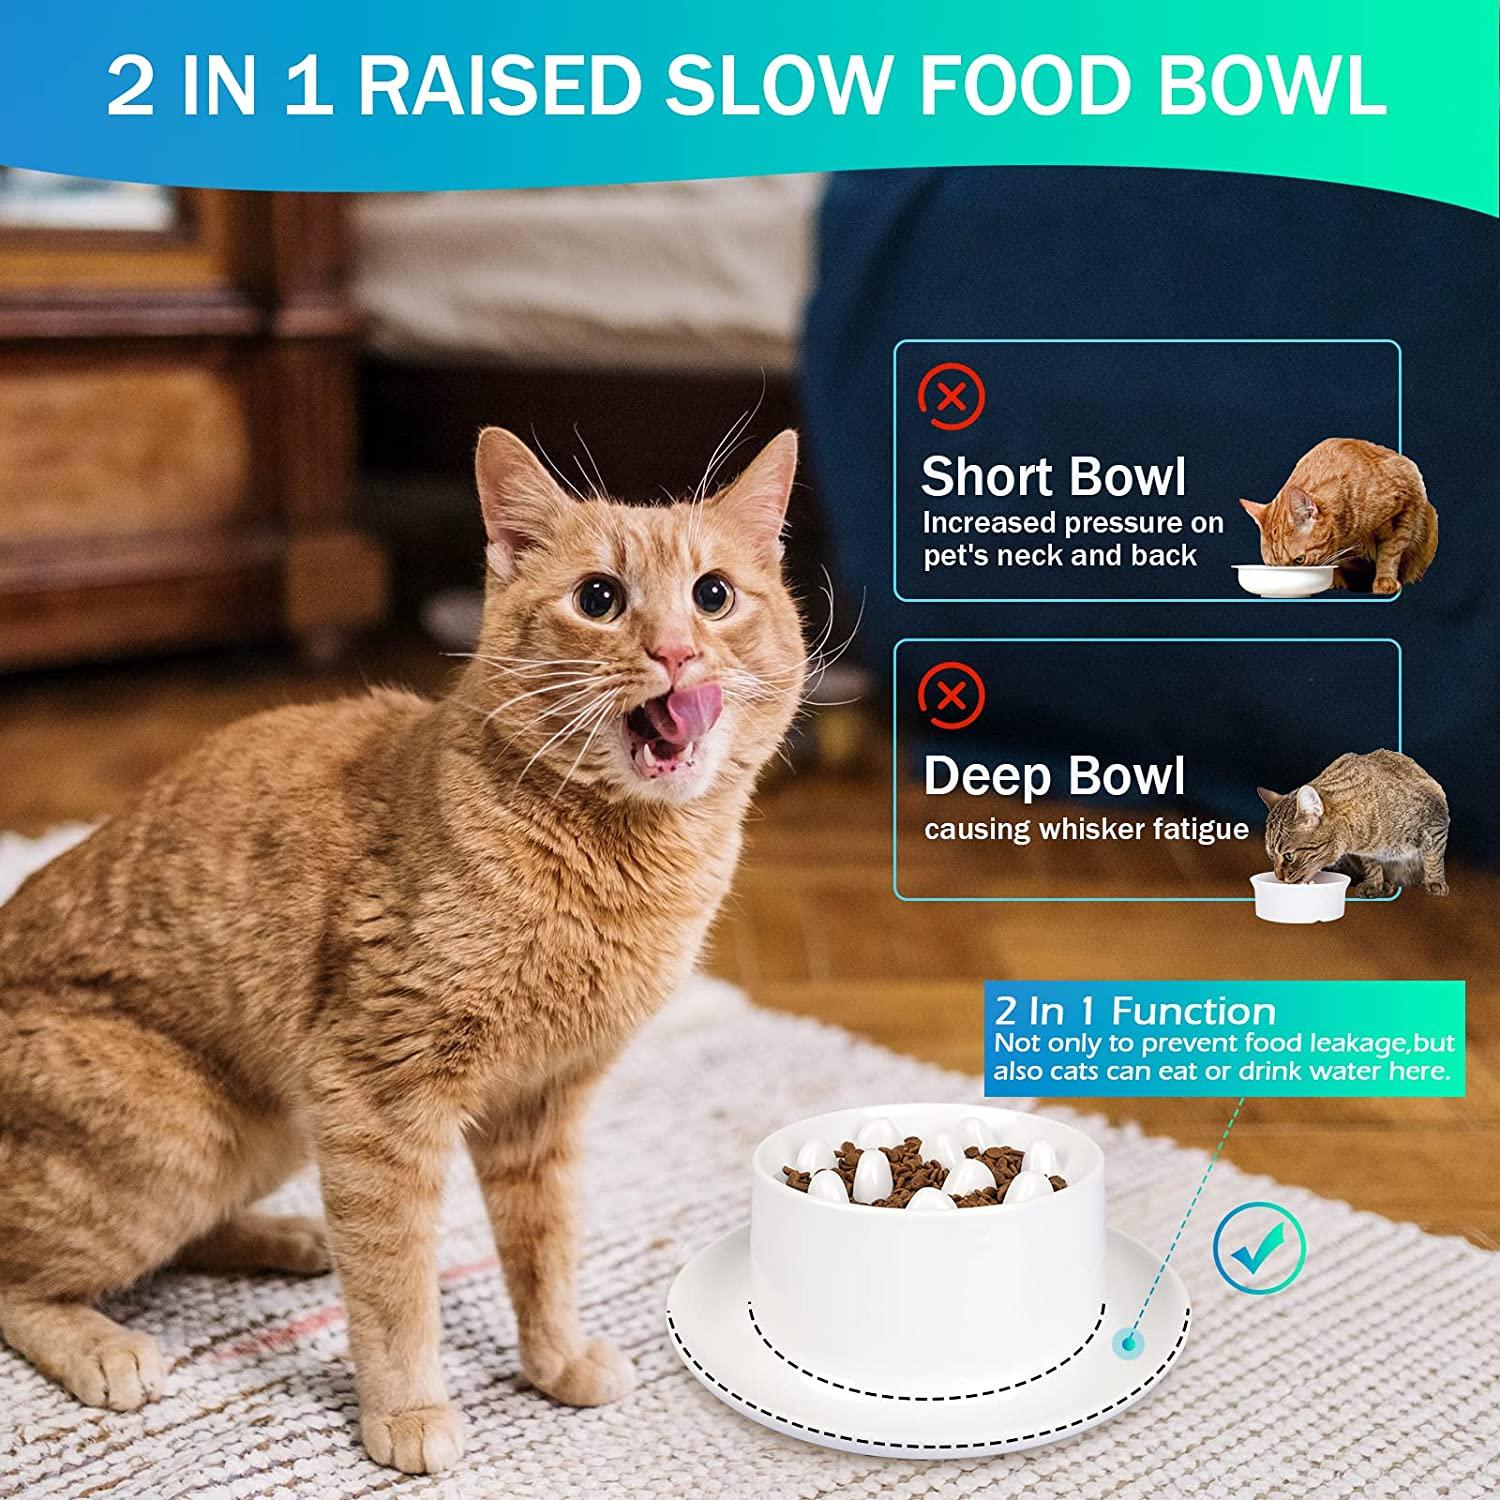 SpeedyPet Interactive Dog & Cat Slow Food Puzzle Feeder